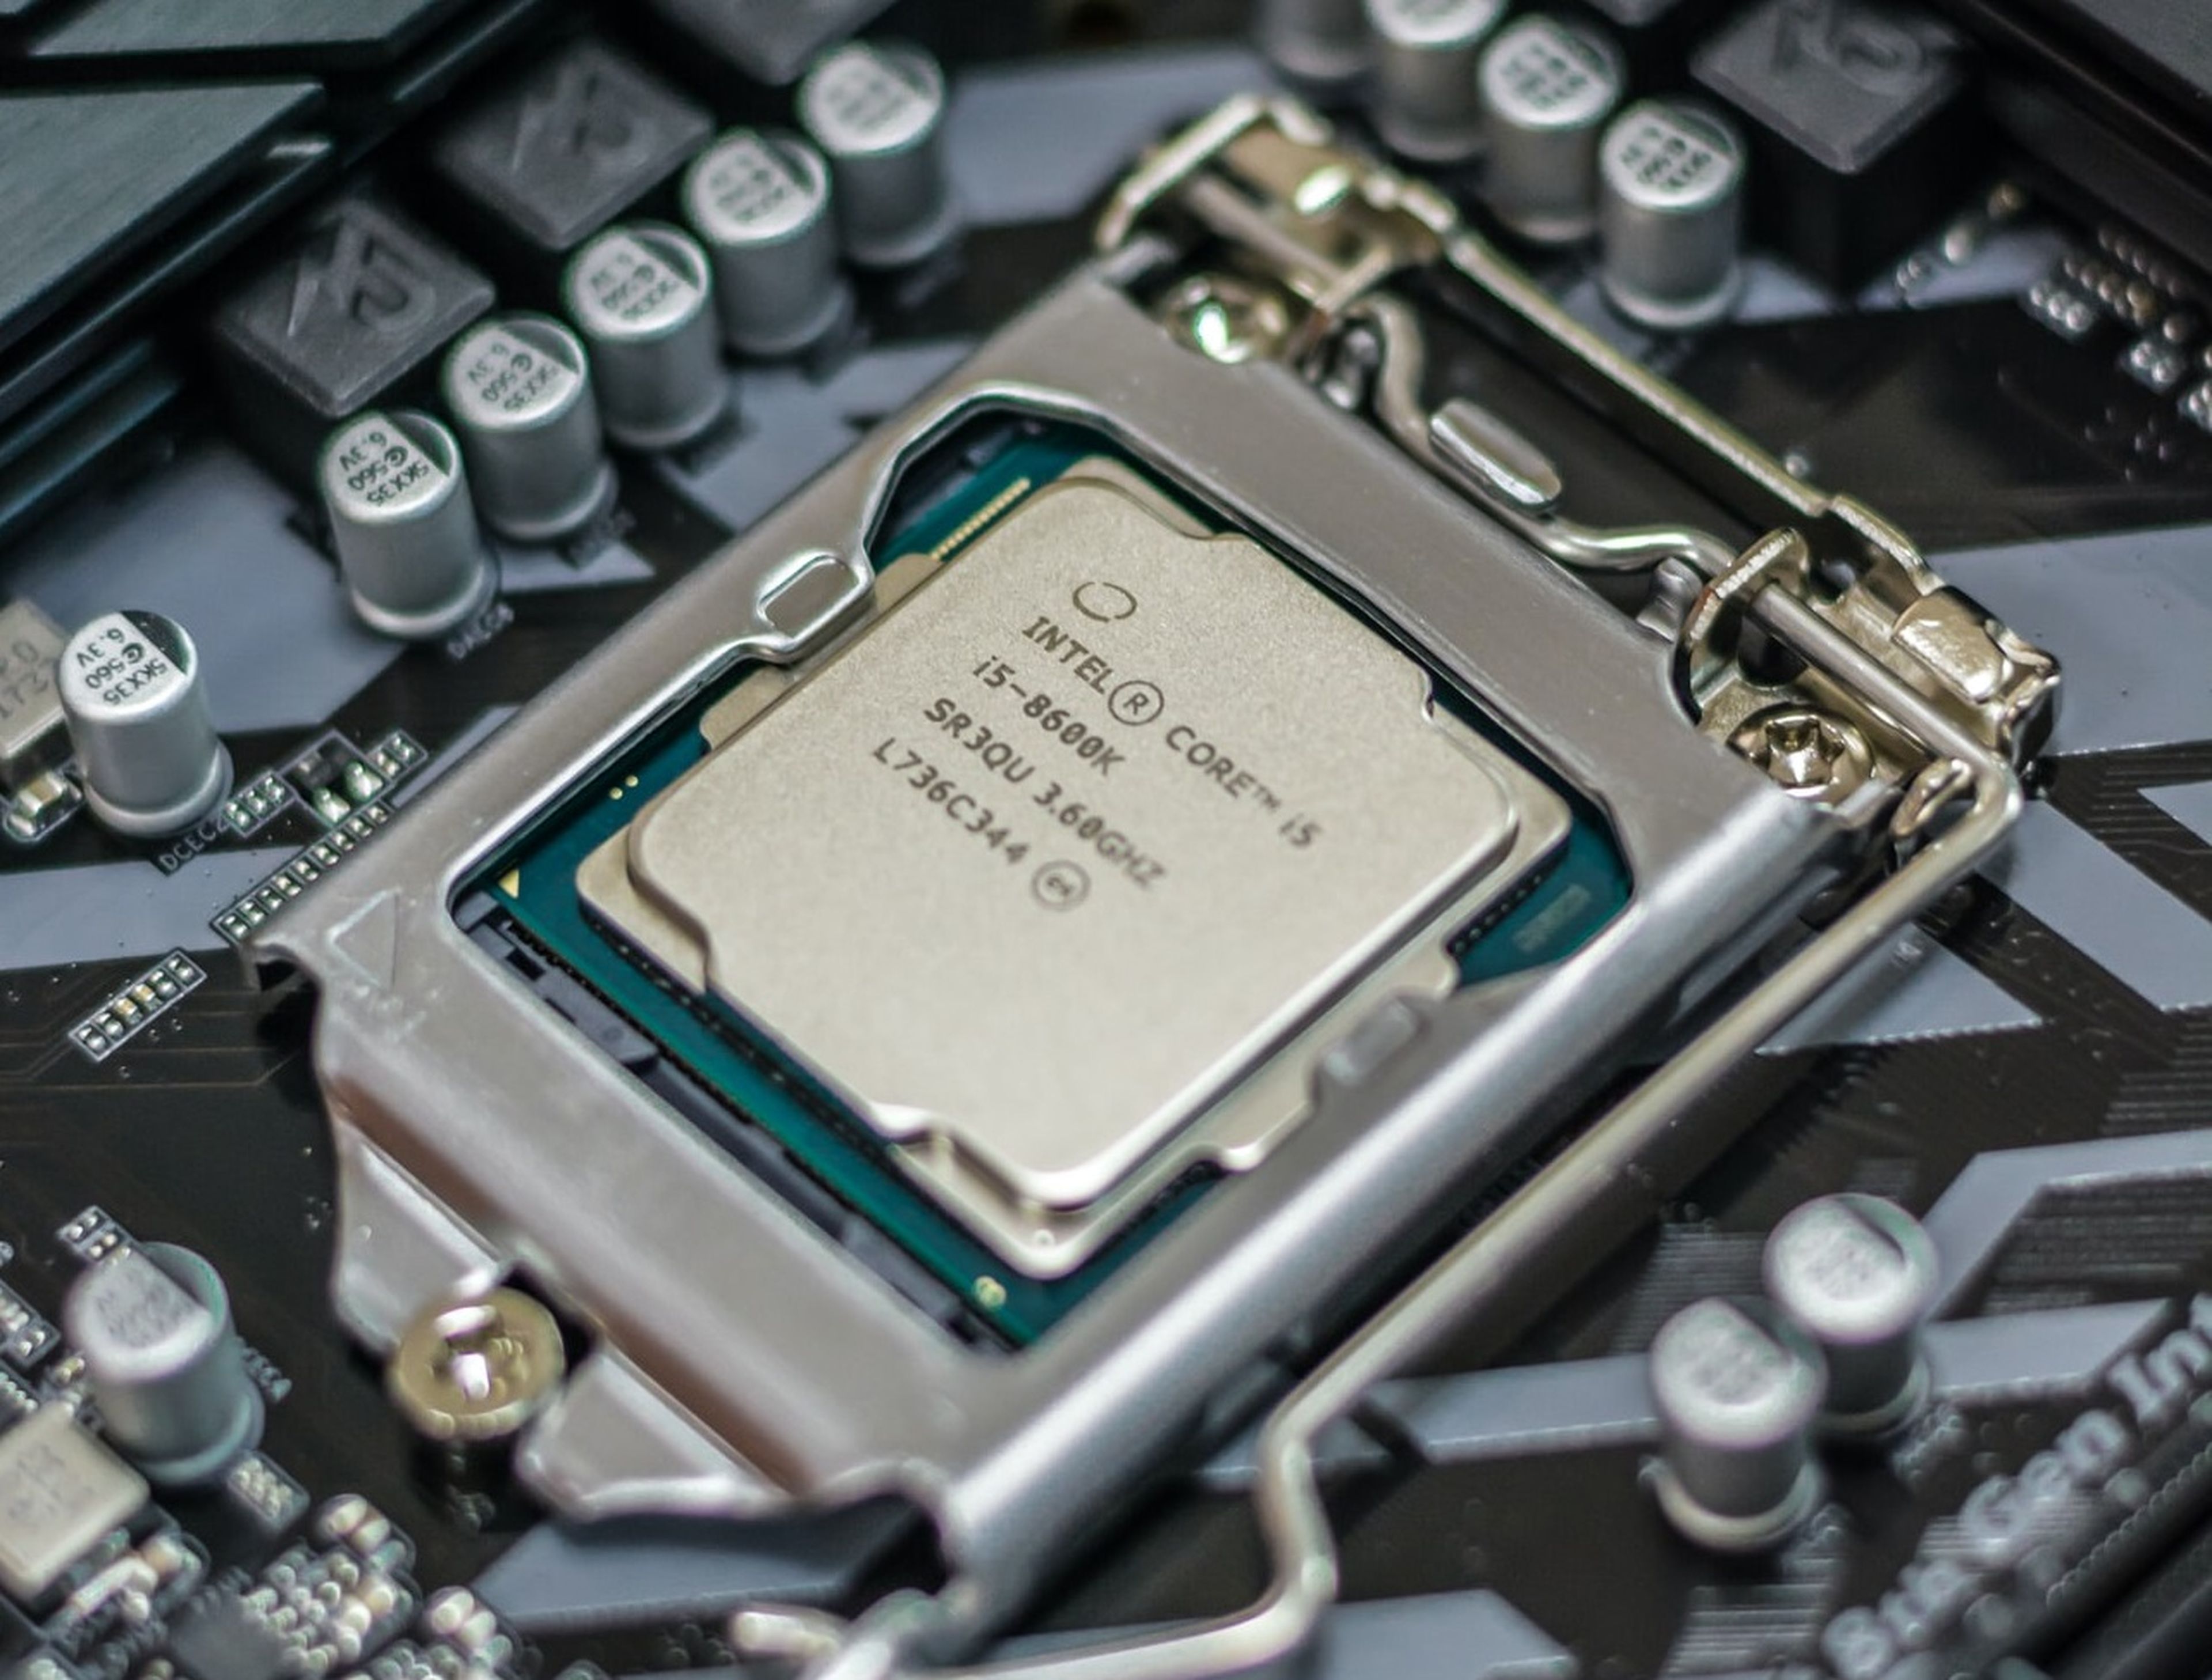 Intel i5 8600K